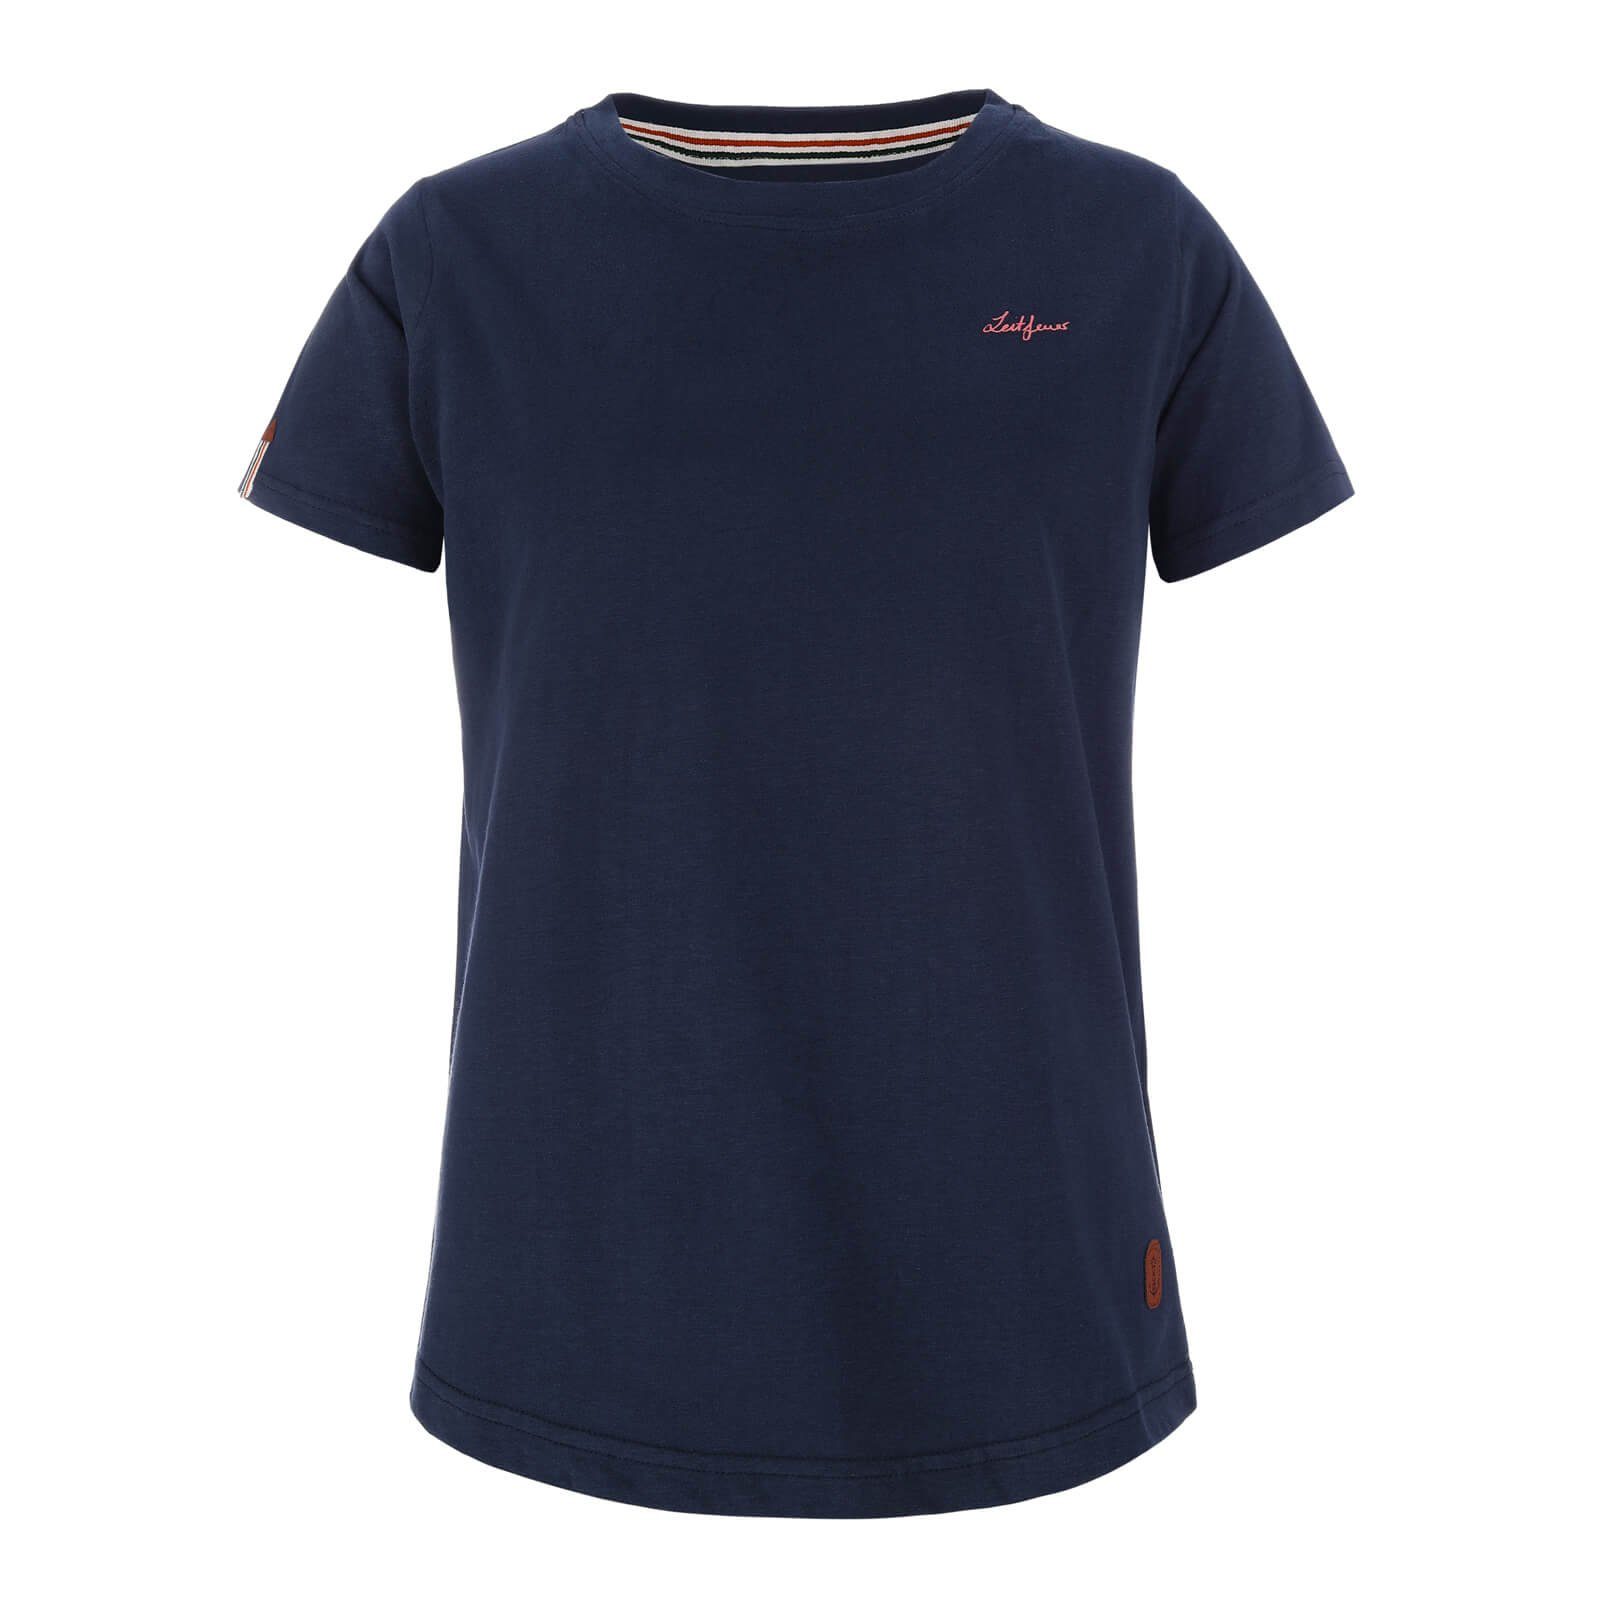 Leitfeuer T-Shirt Damen Kurzarmshirt - Rundhalsshirt einfarbig aus Baumwolle dunkelblau